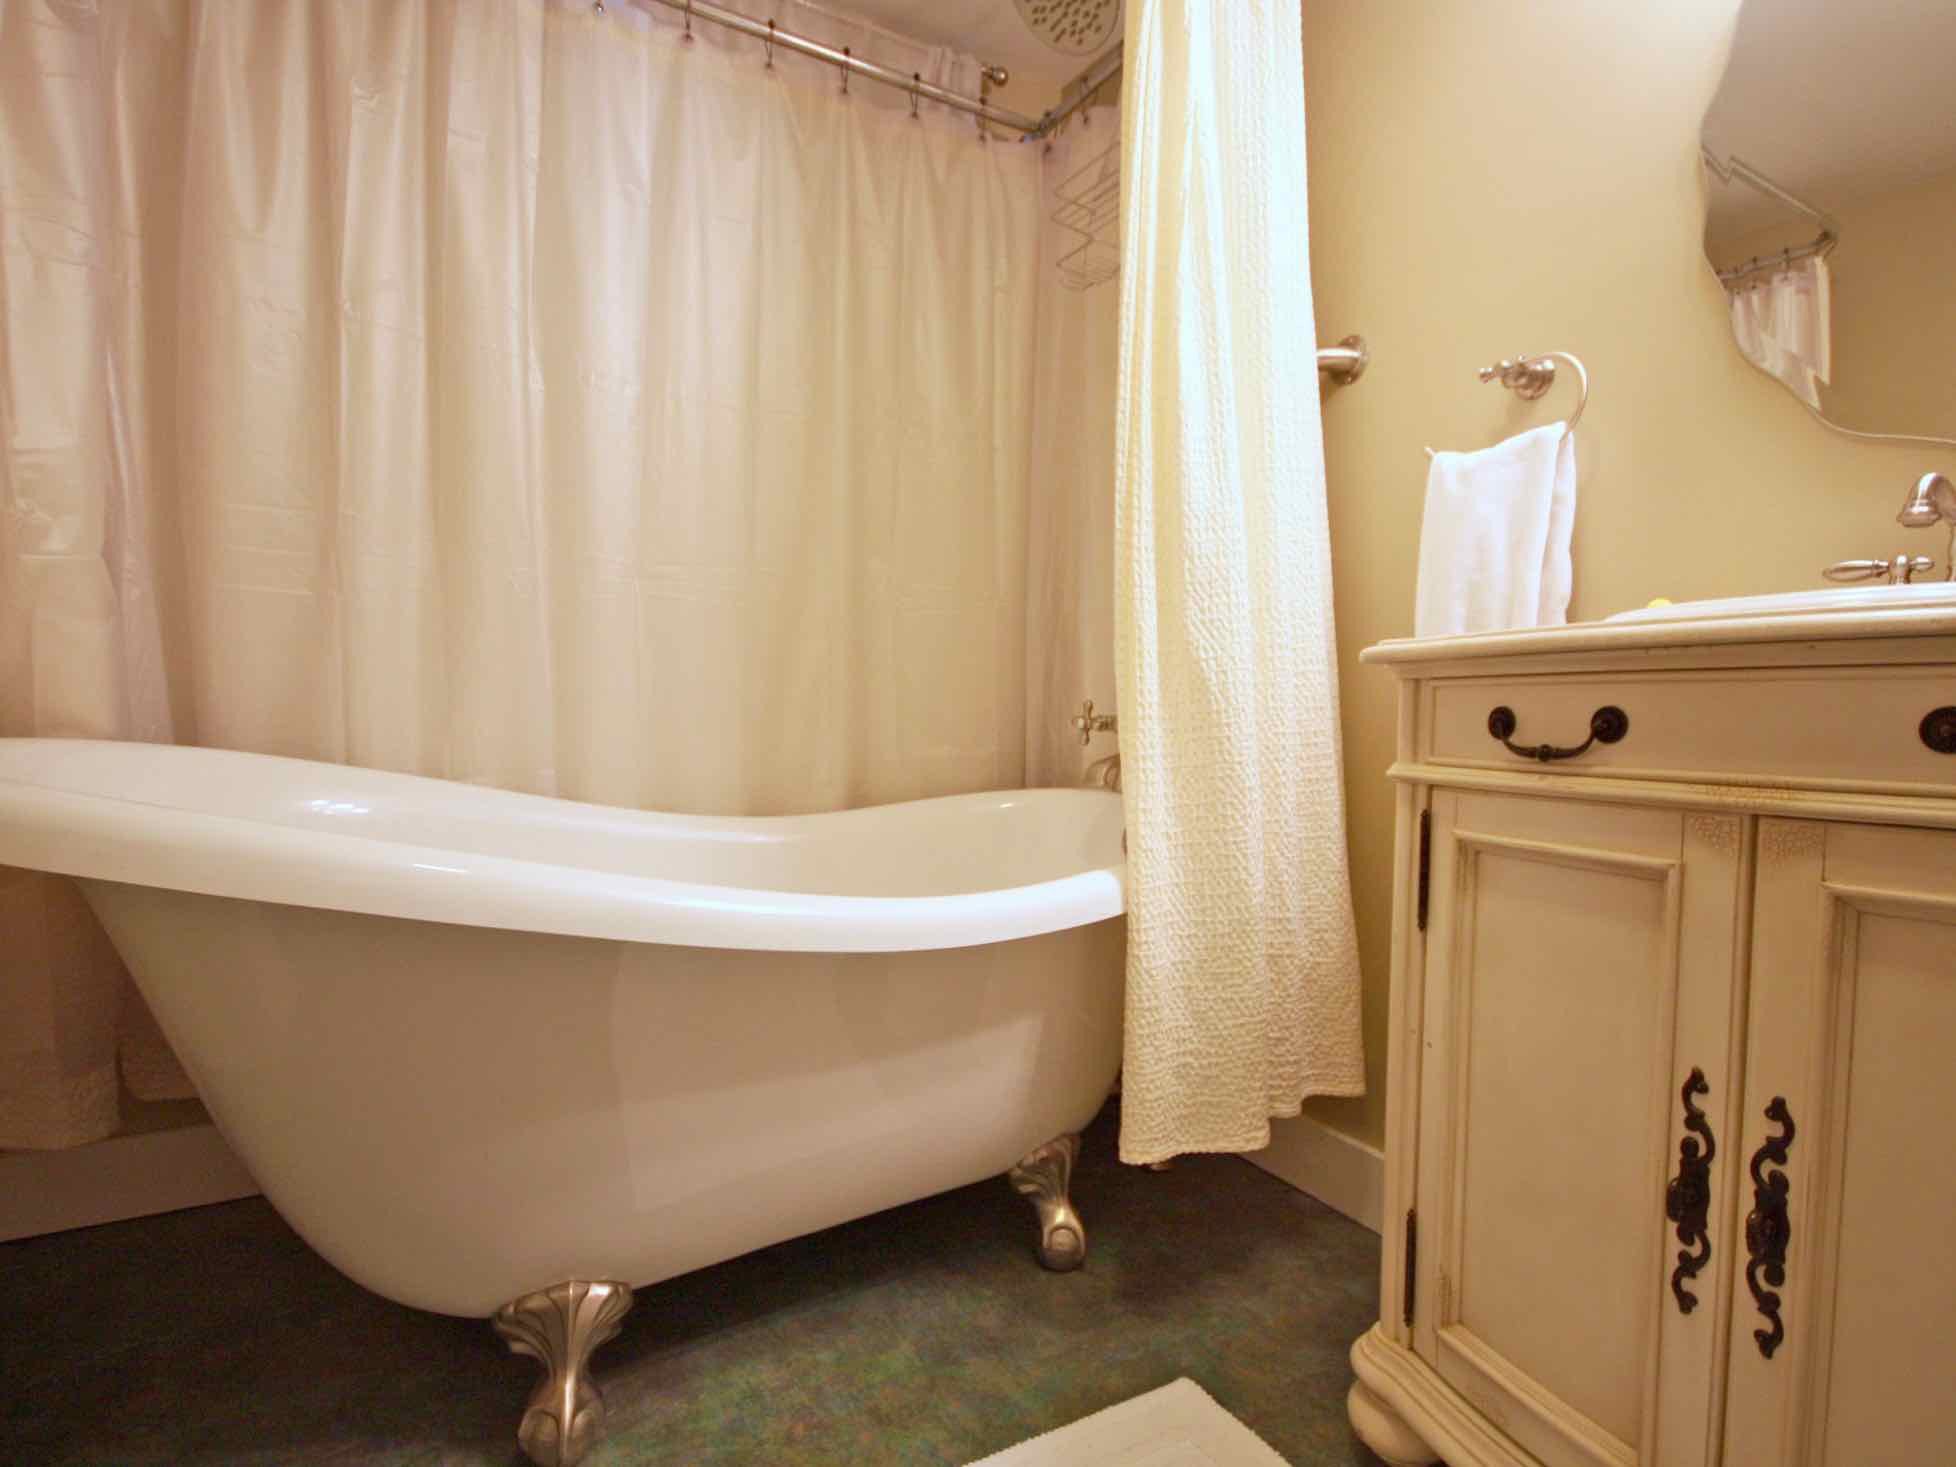 Acadia Suite bathroom with claw foot soaker tub